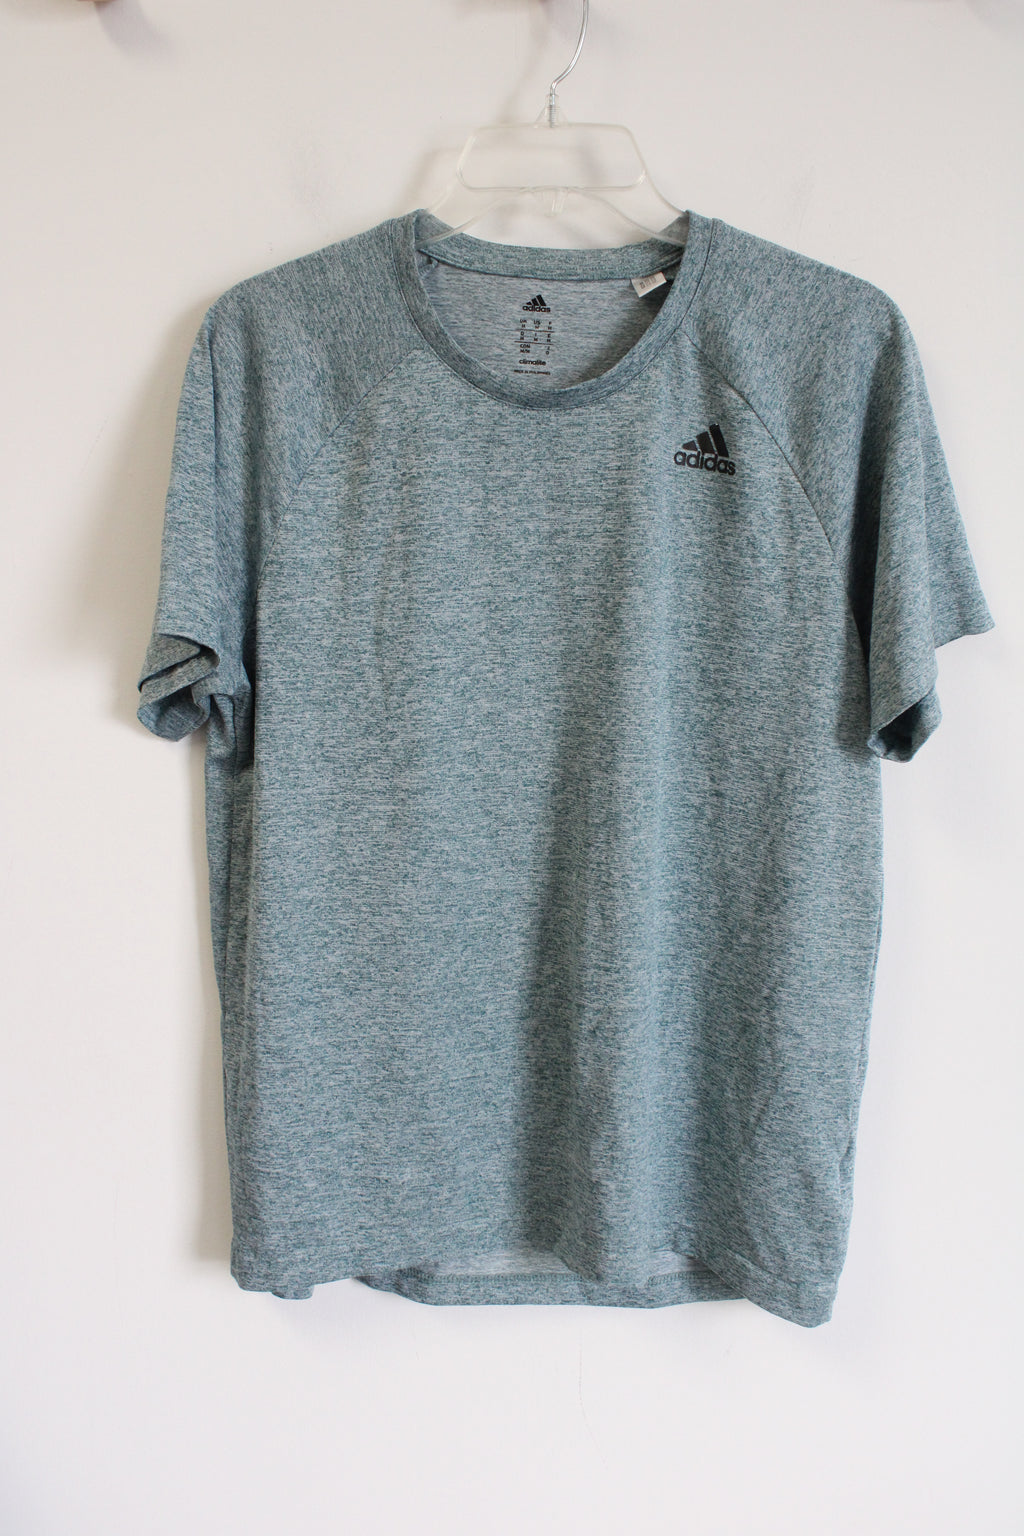 Adidas Green Blue Athletic Shirt | M